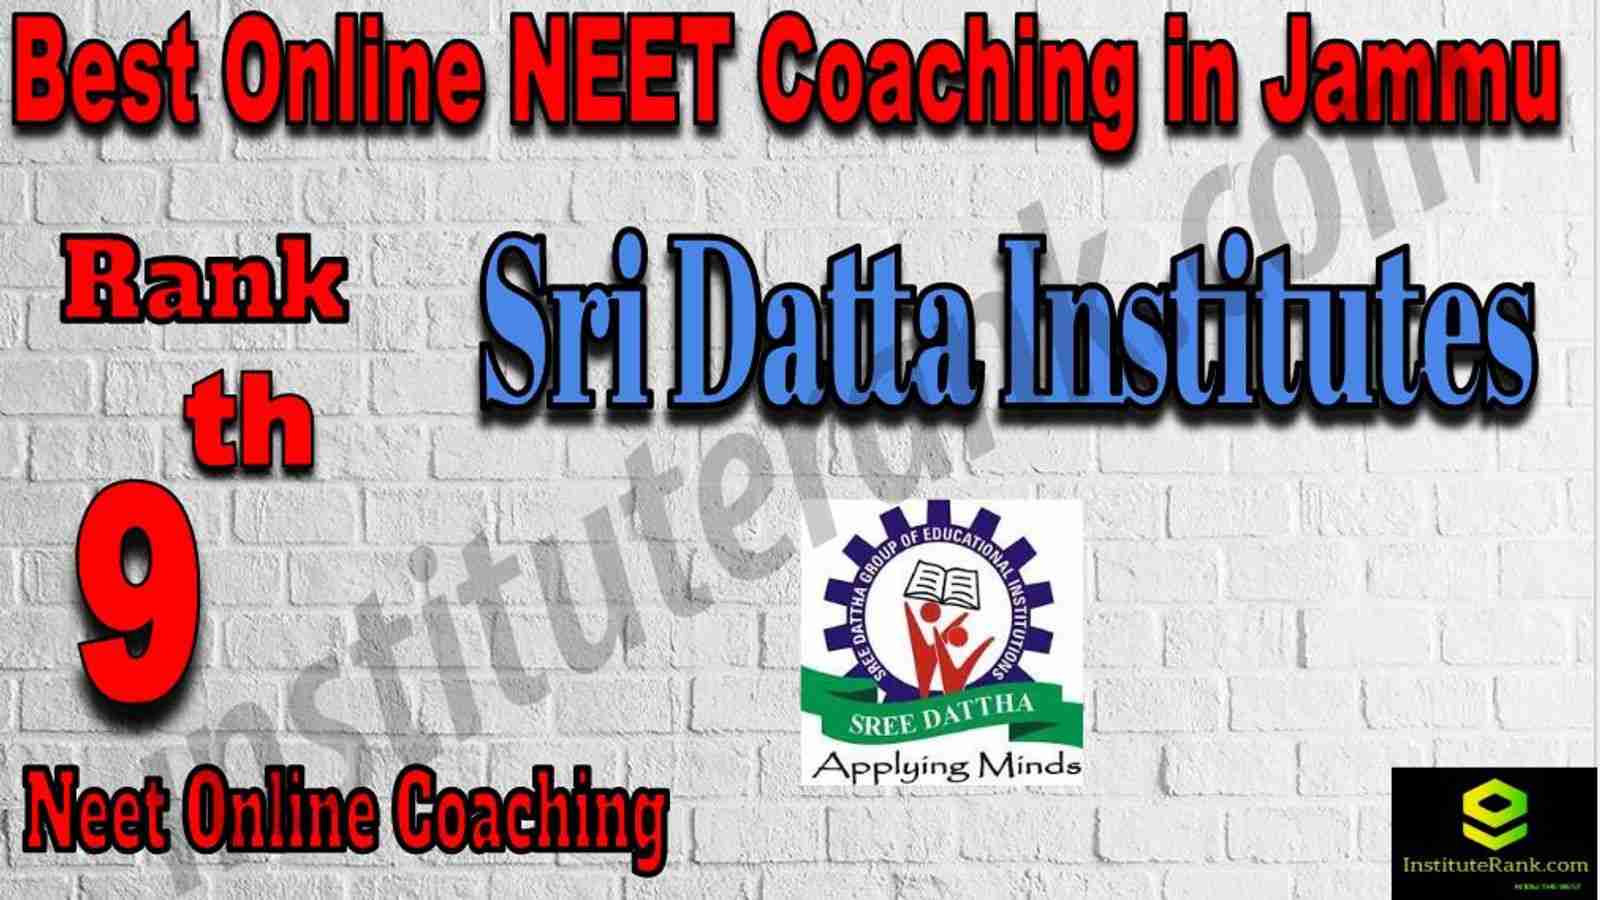 9th Best Online Neet Coaching in Jammu